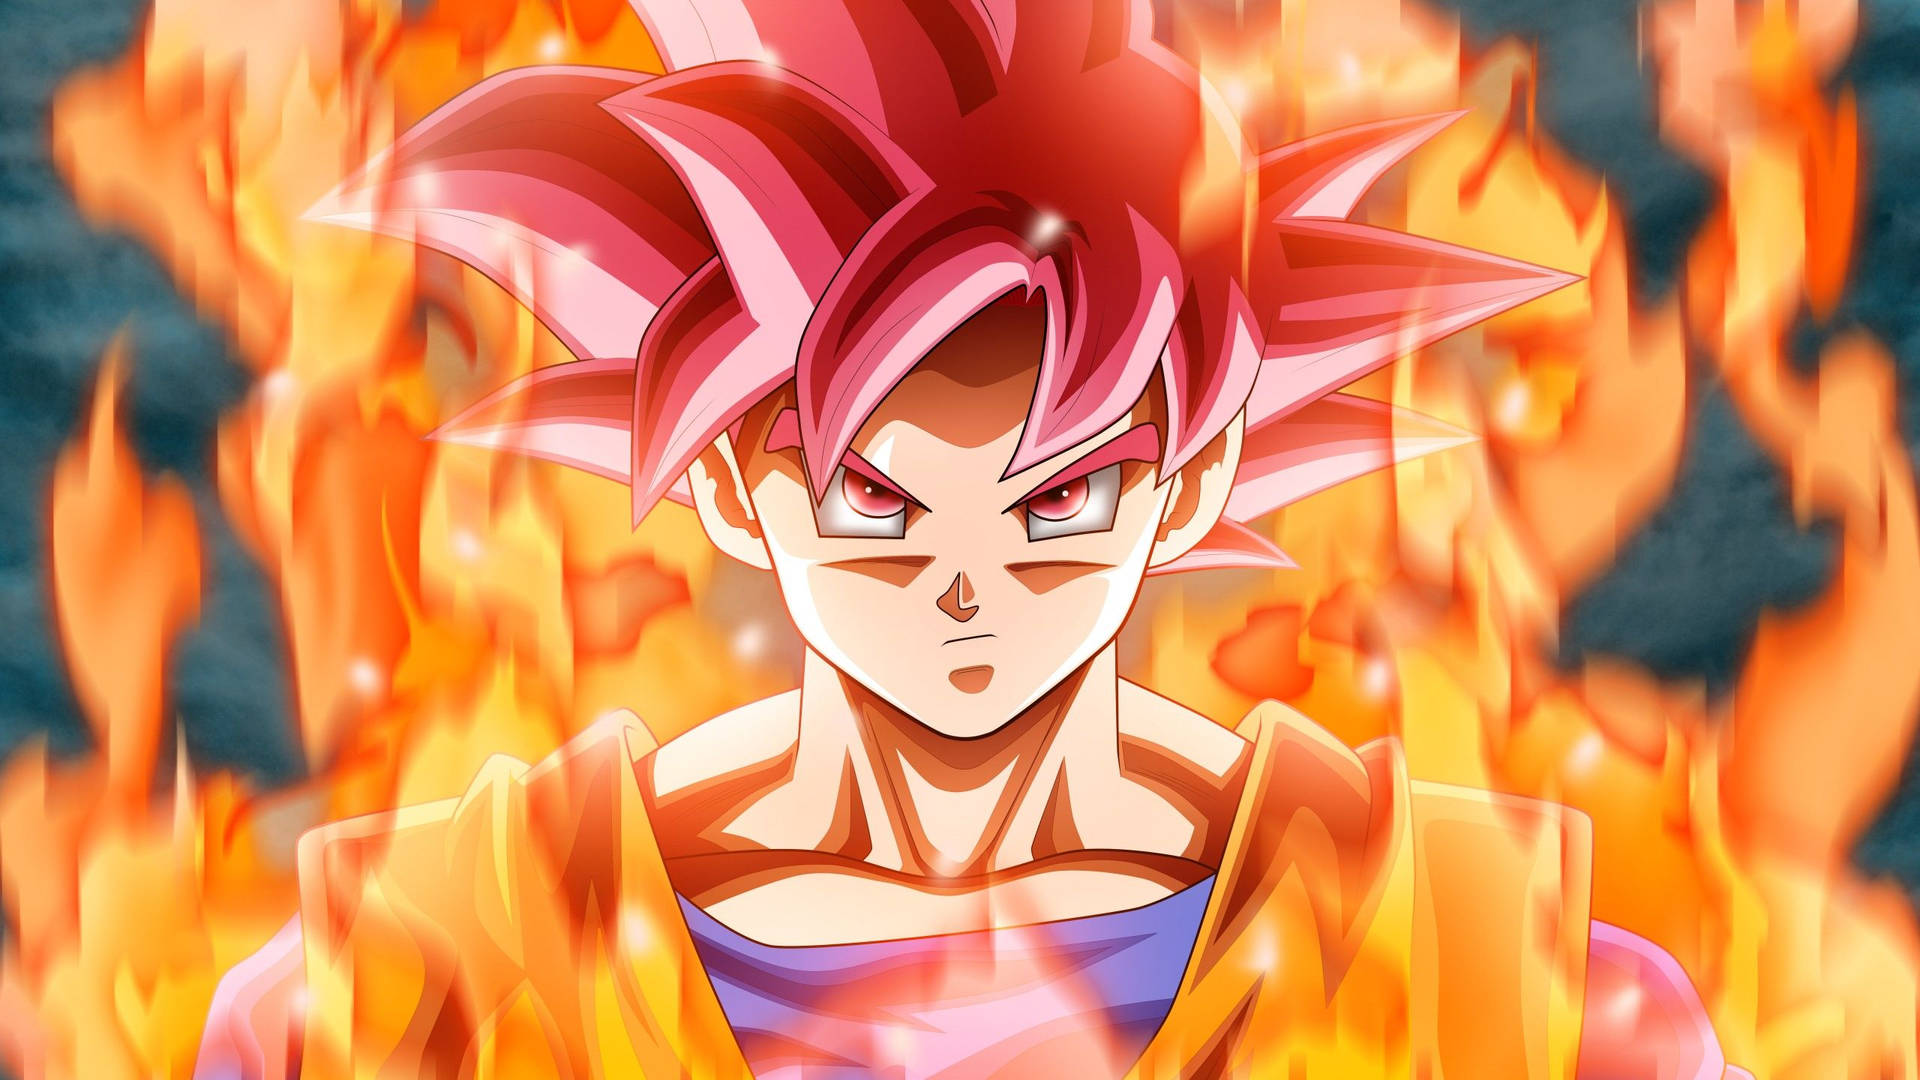 Furious Goku of Dragon Ball Z blasts with raw energy. Wallpaper